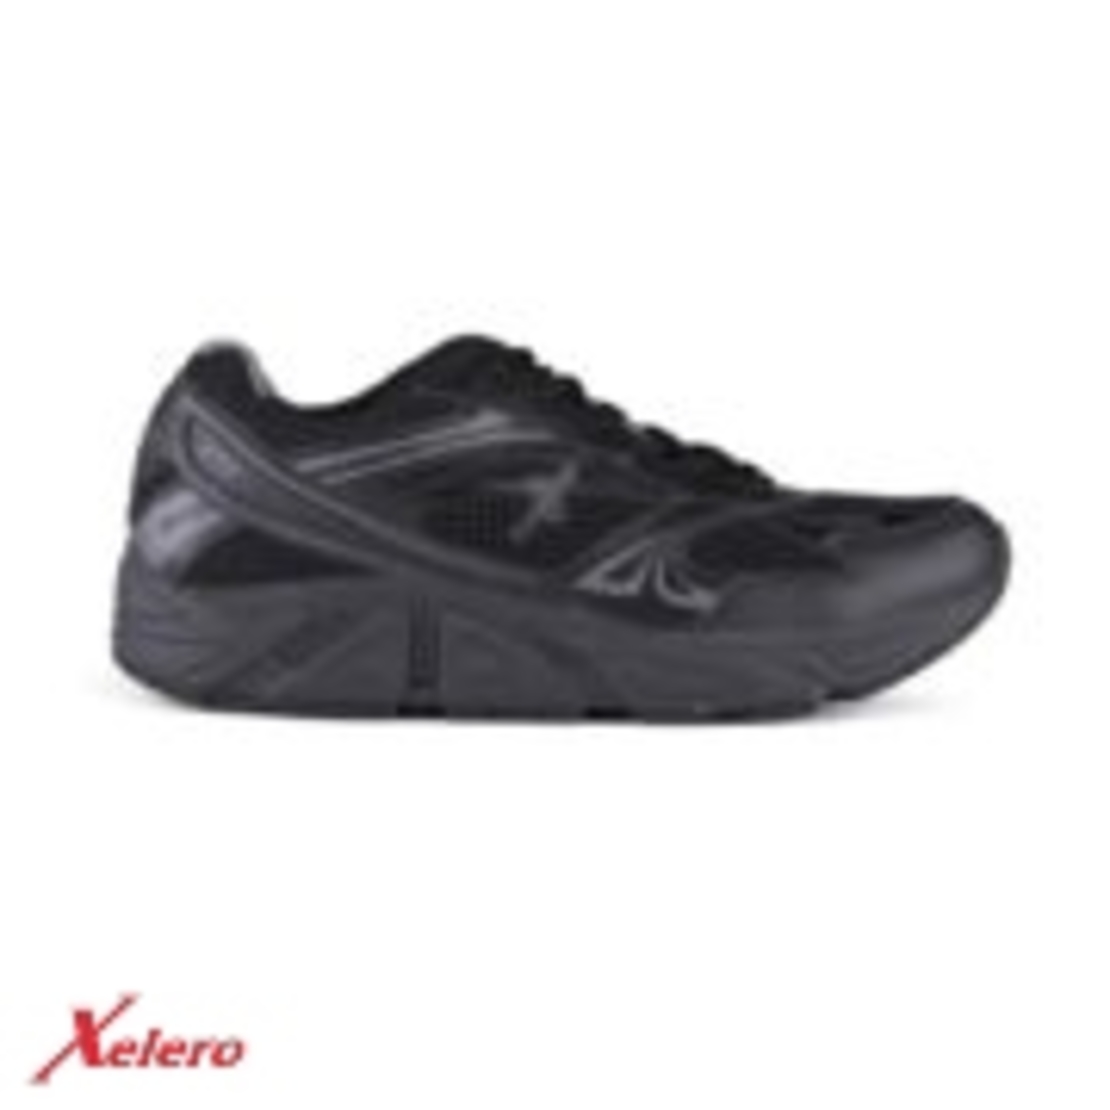 Xelero נעלי הליכה ספורטיביות לגבר דגם Genesis XPS Mens